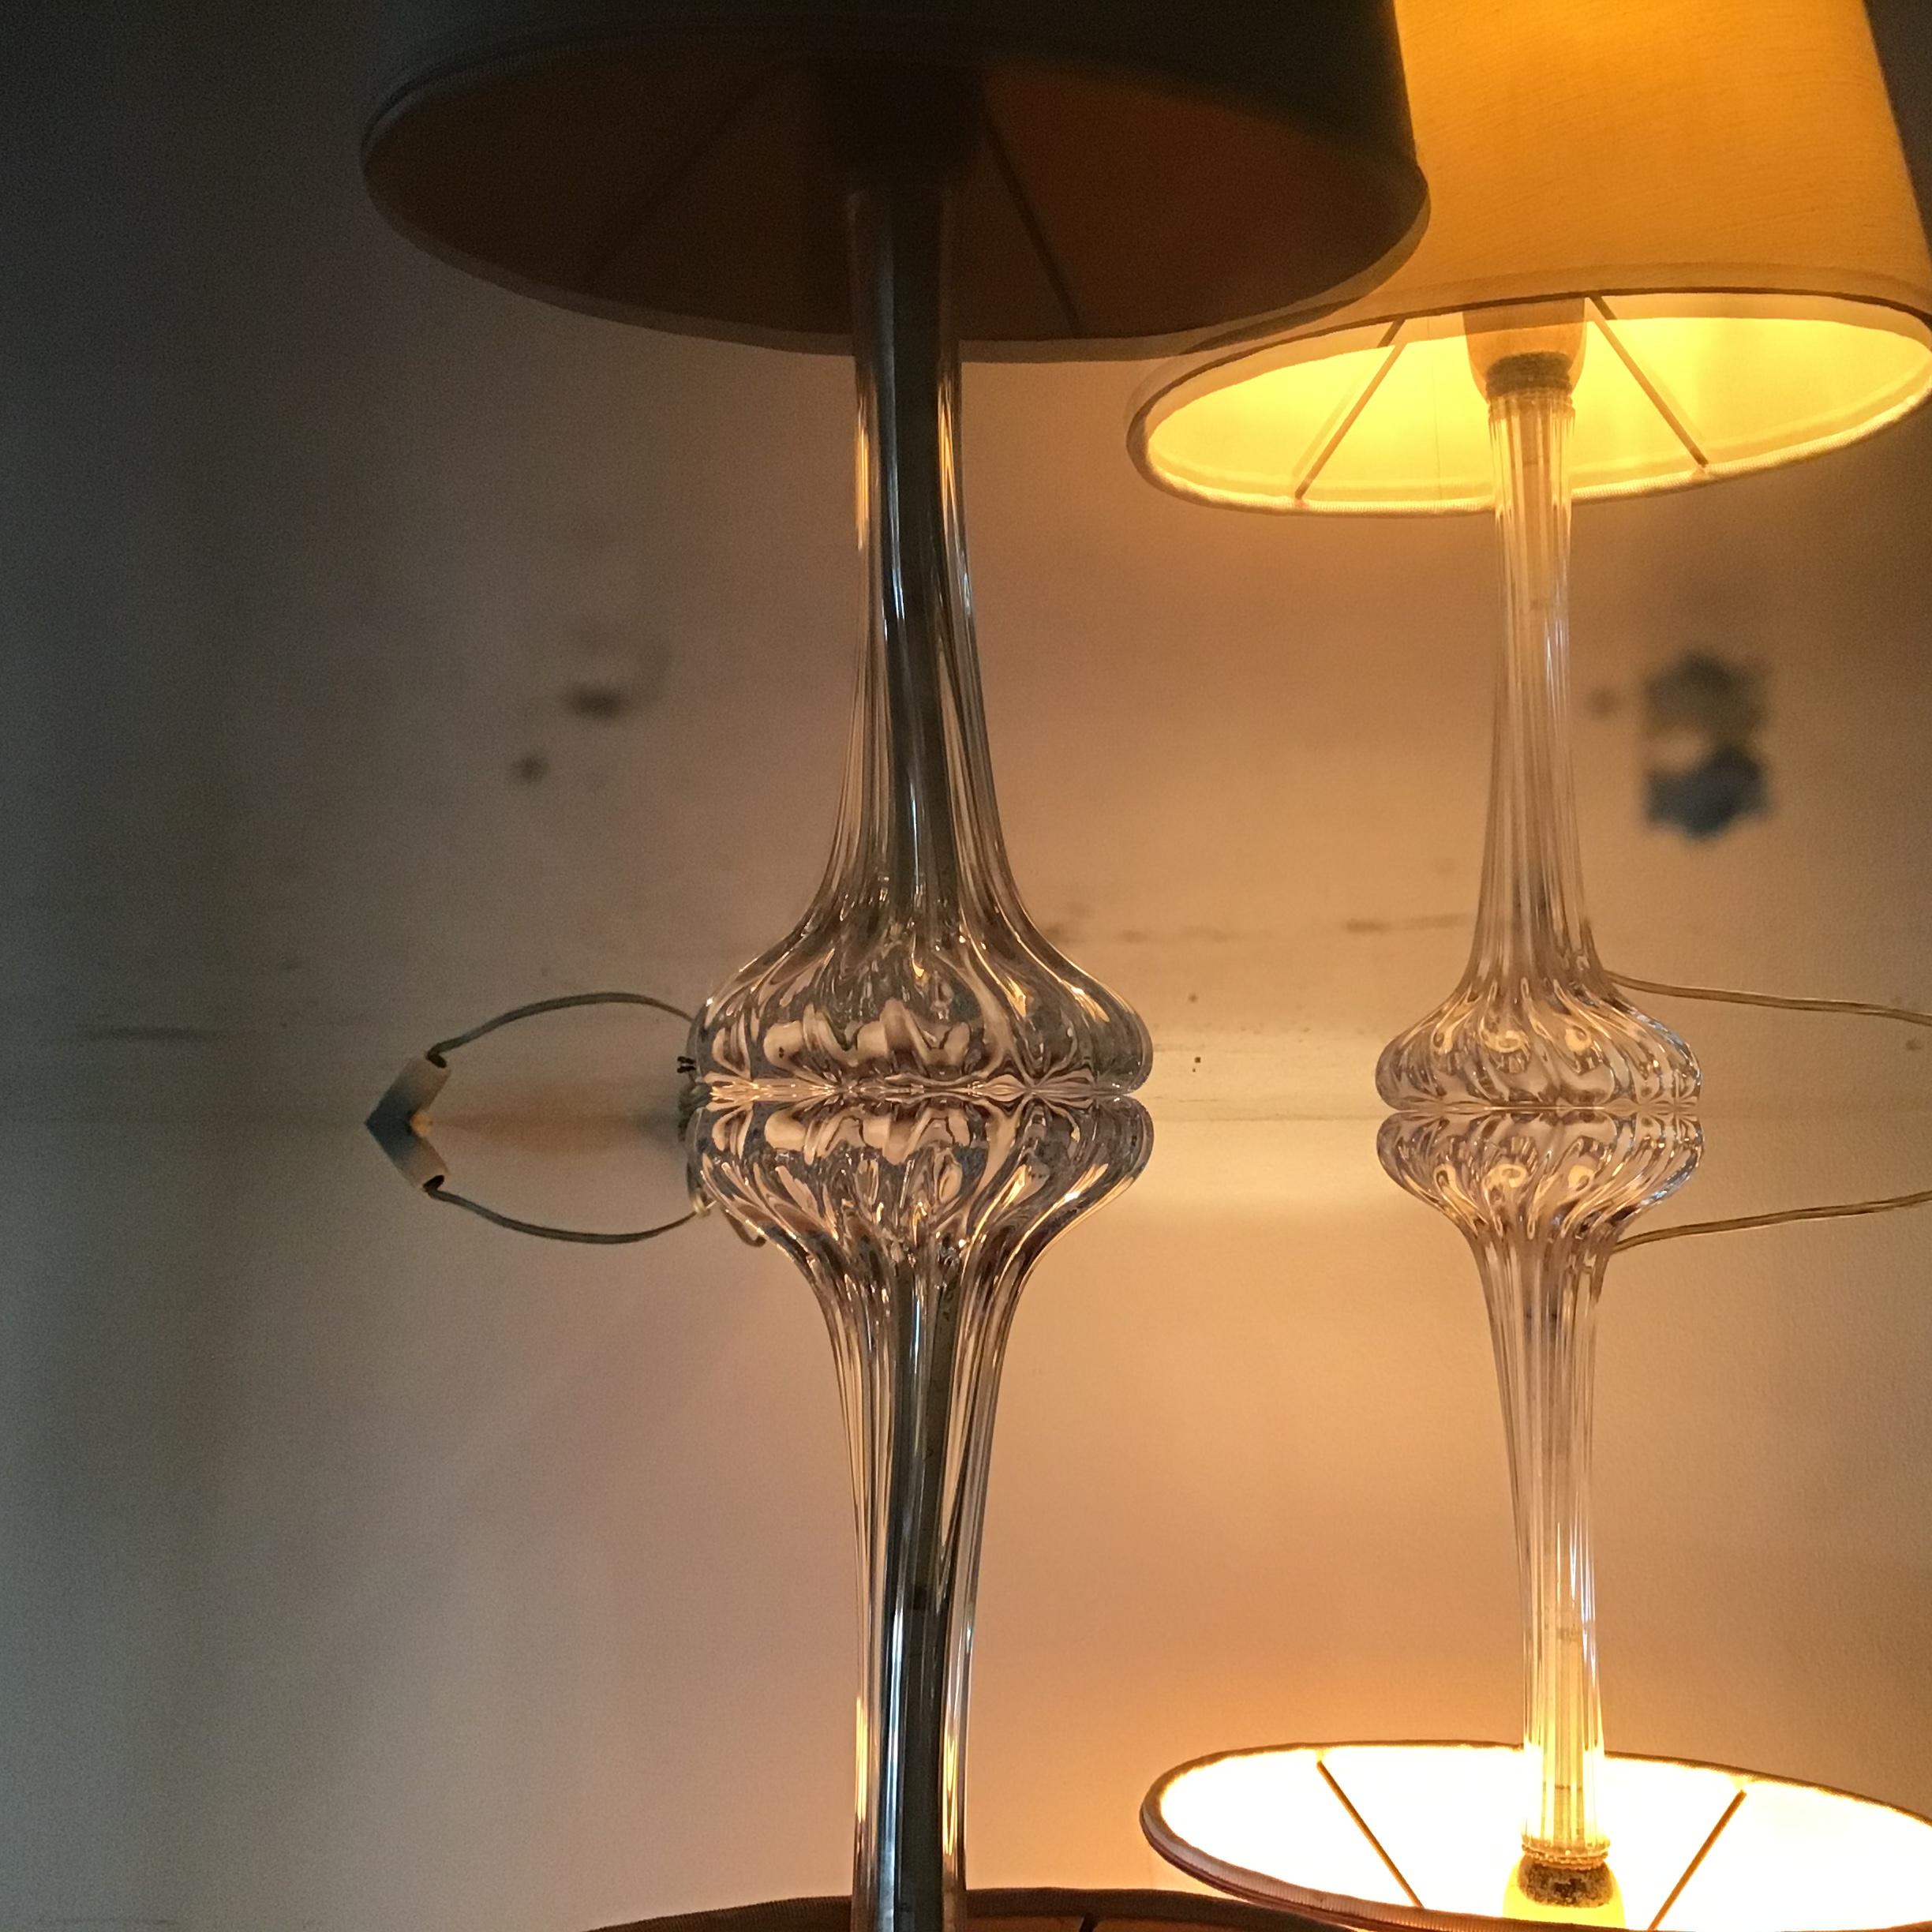 Seguso table lamps Murano glass, 1950, Italy.